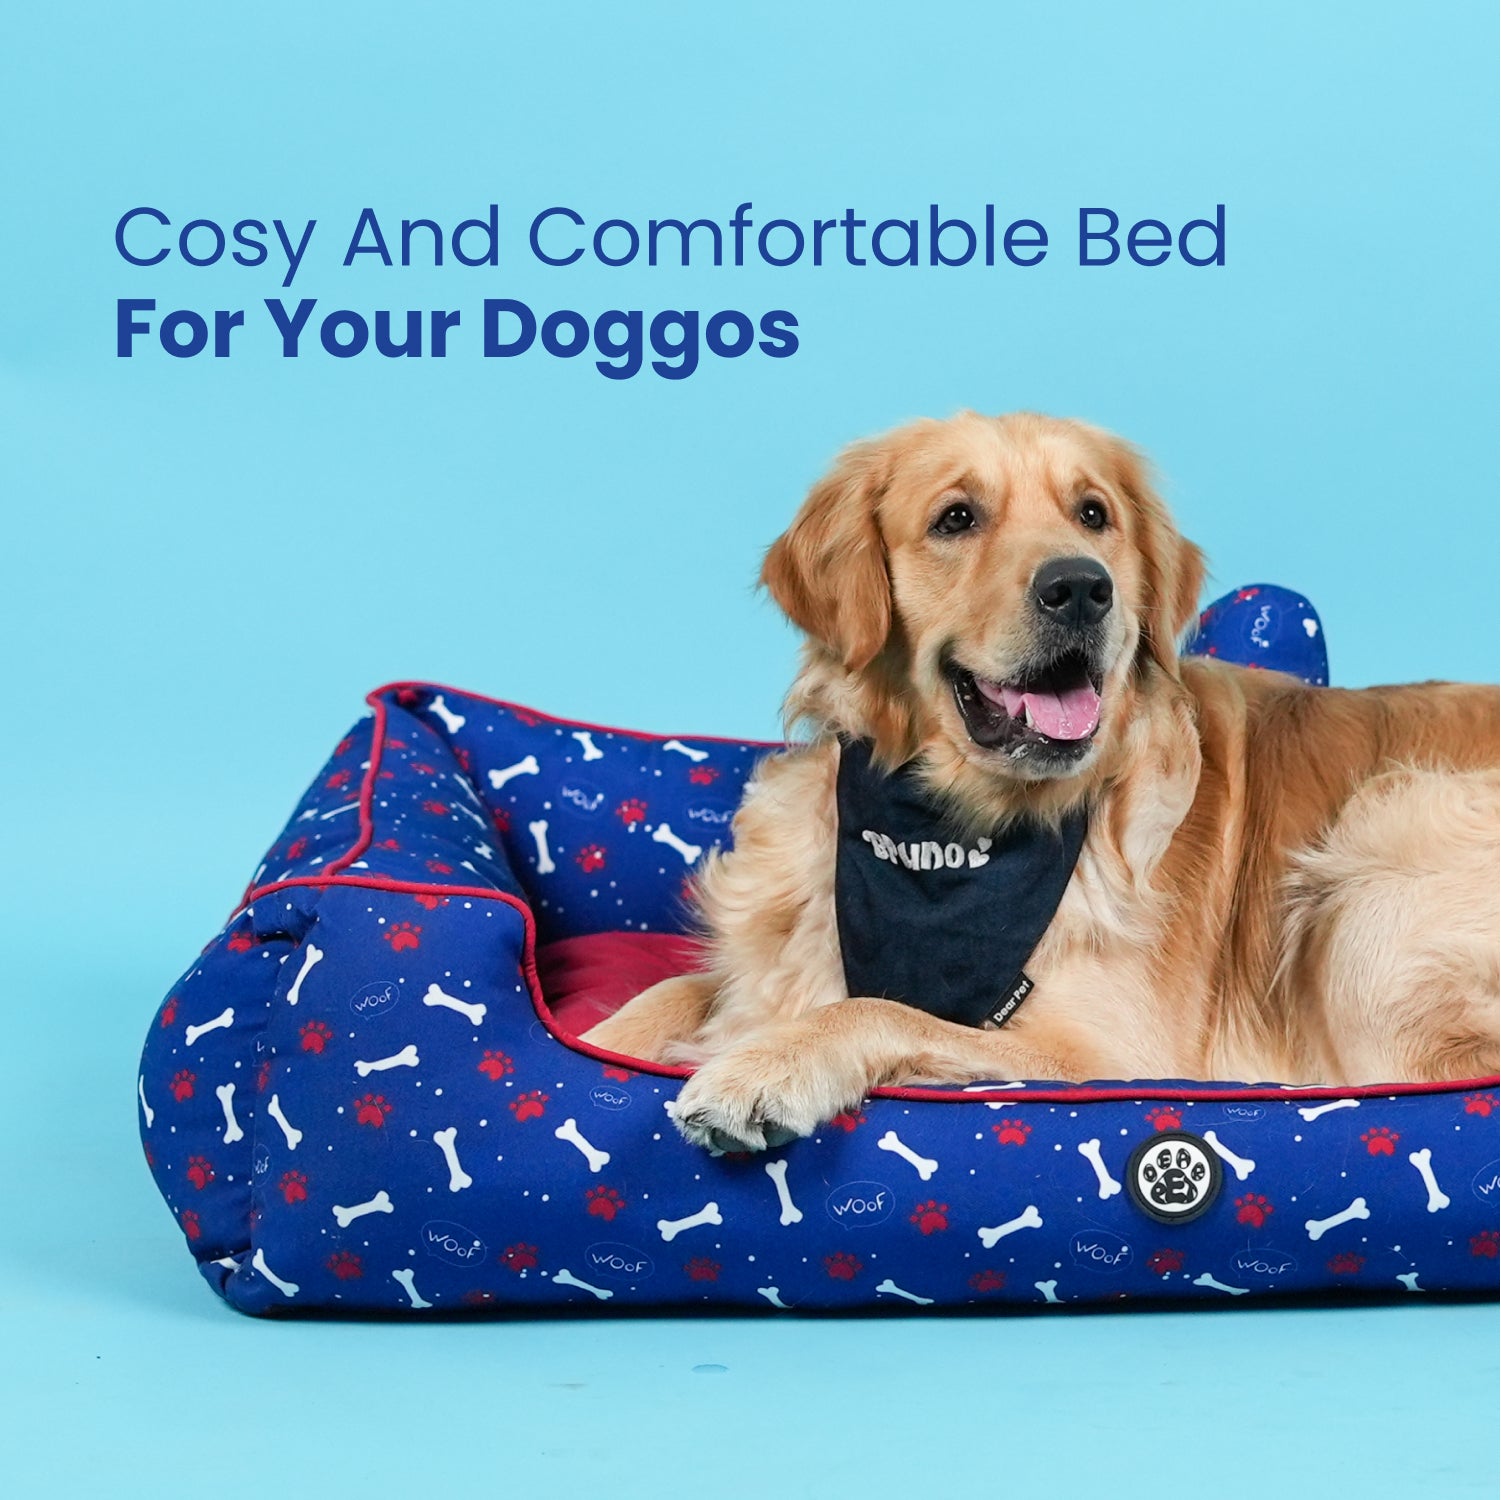 Dear Pet Double Trouble Teal Blue & Orange Lounger Dog Bed